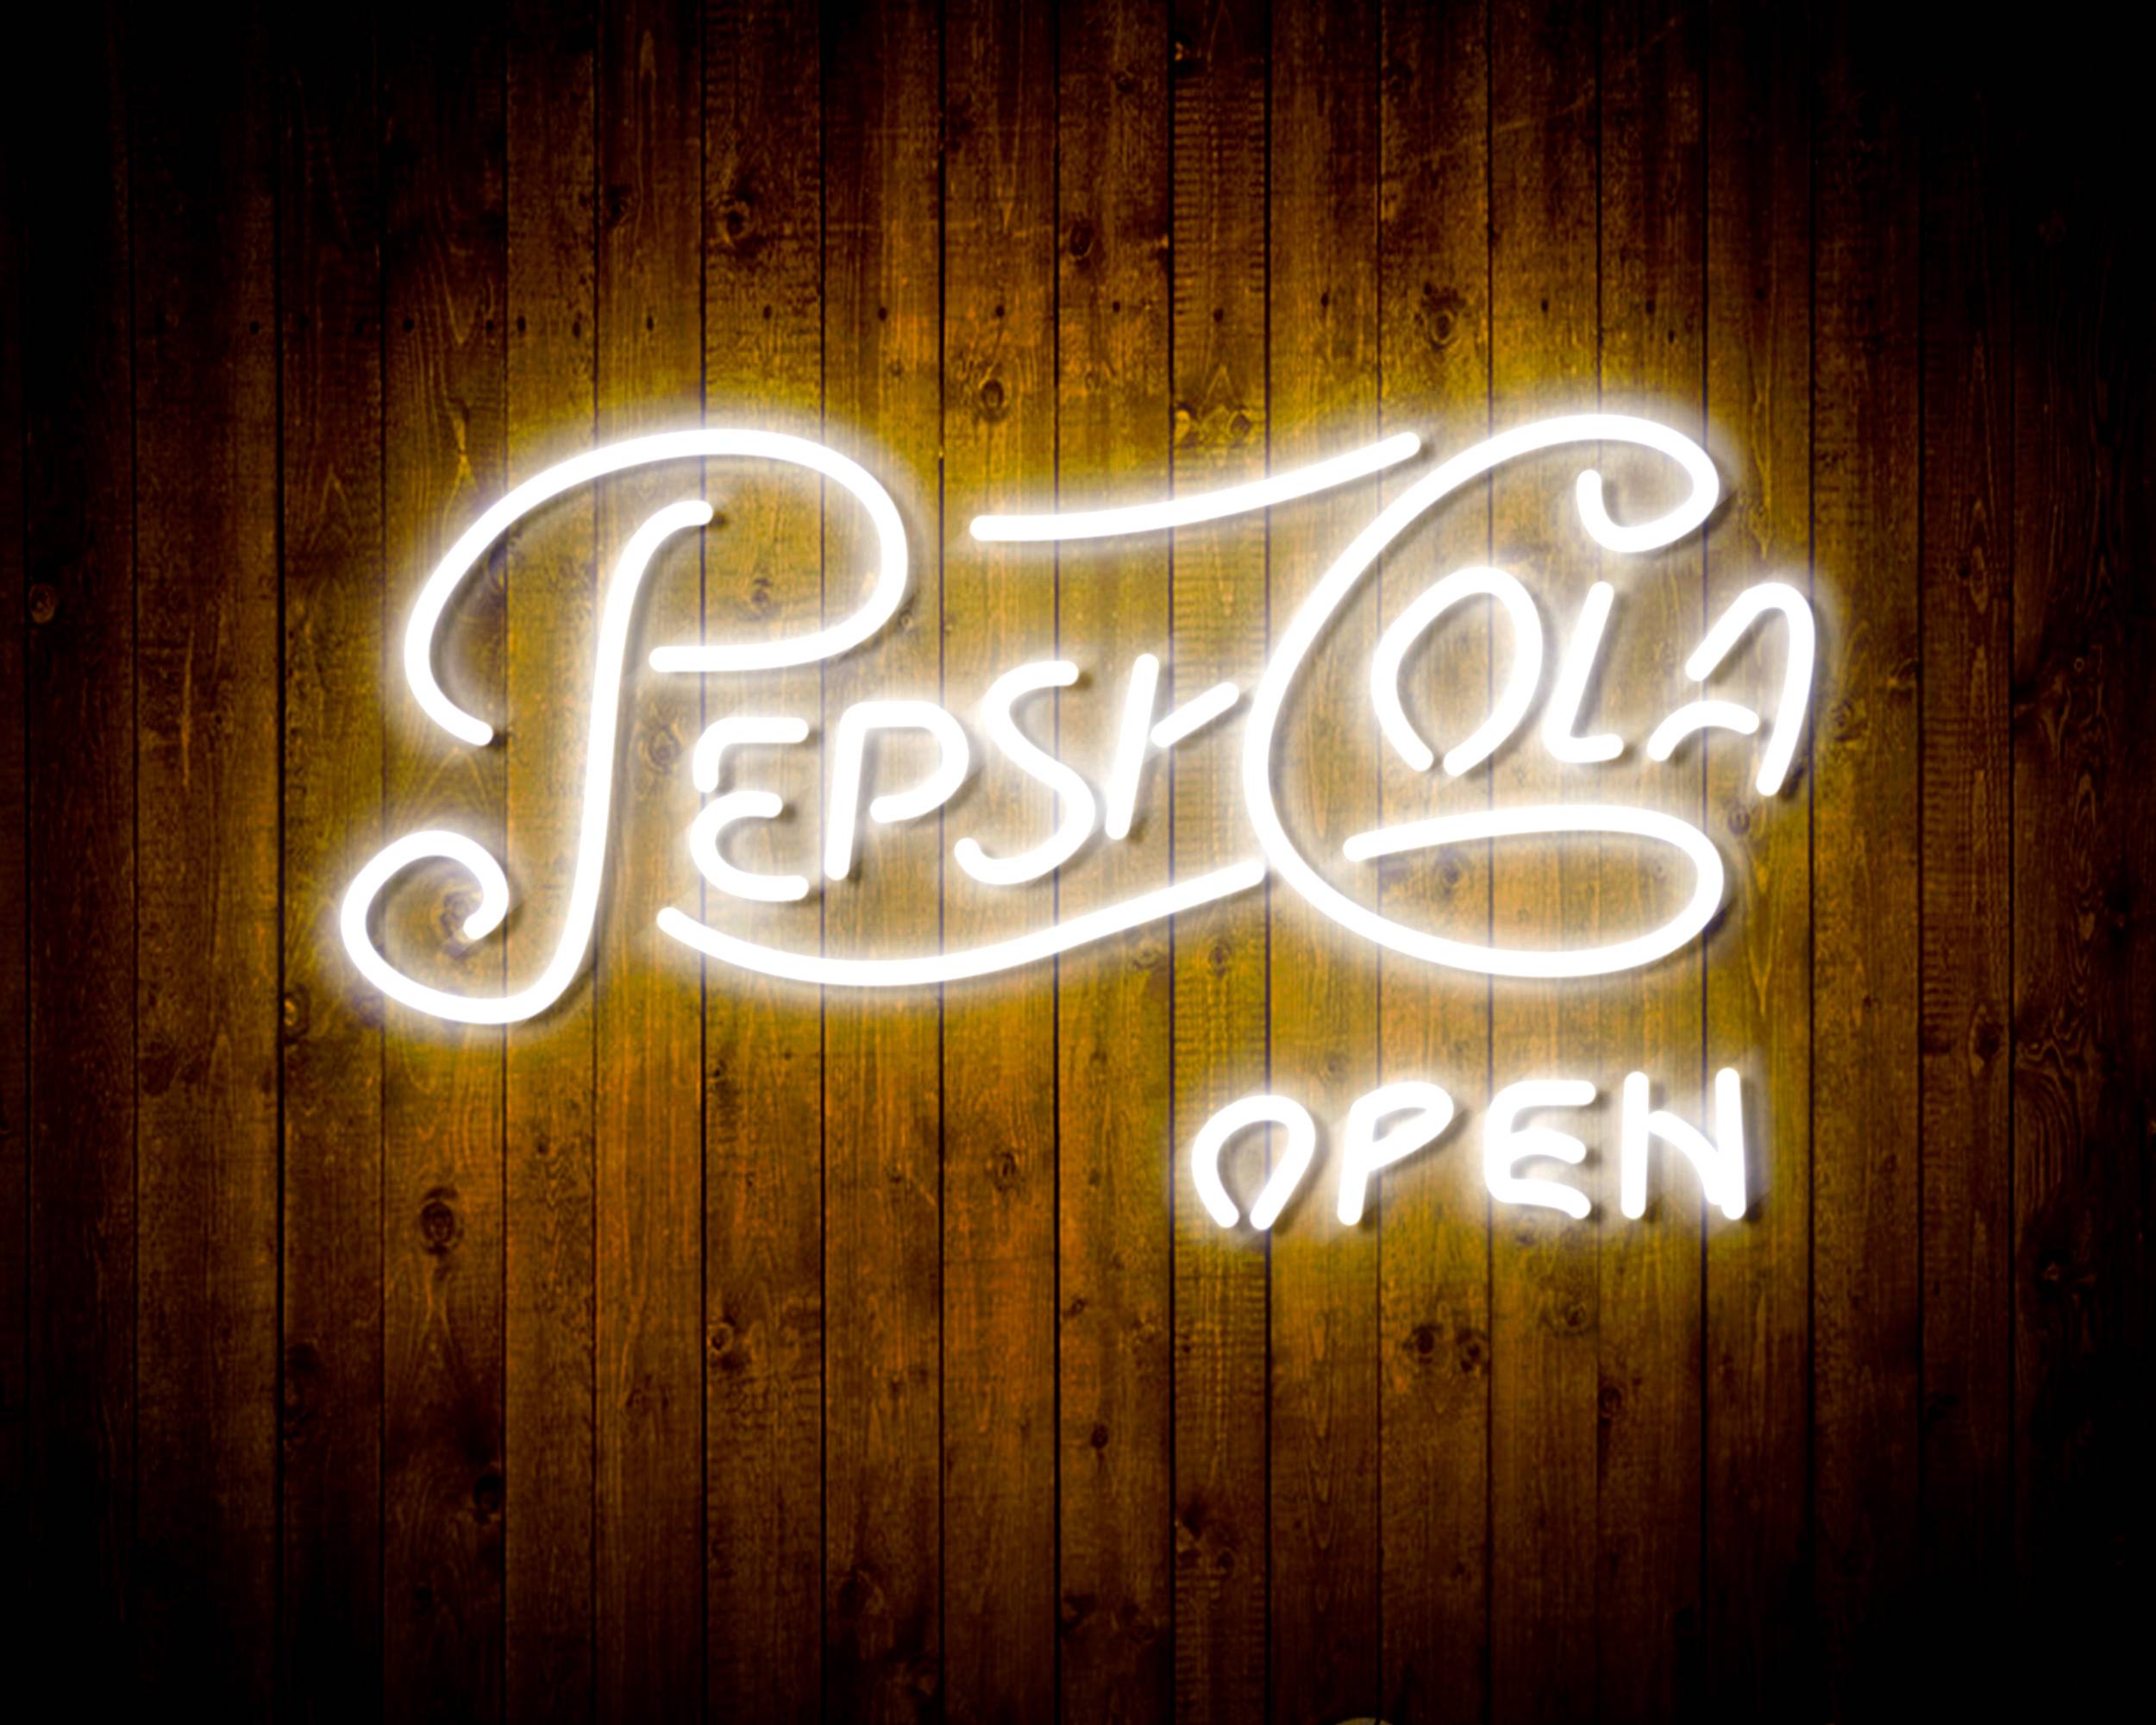 Pepsi Cola Open Handmade Neon Flex LED Sign